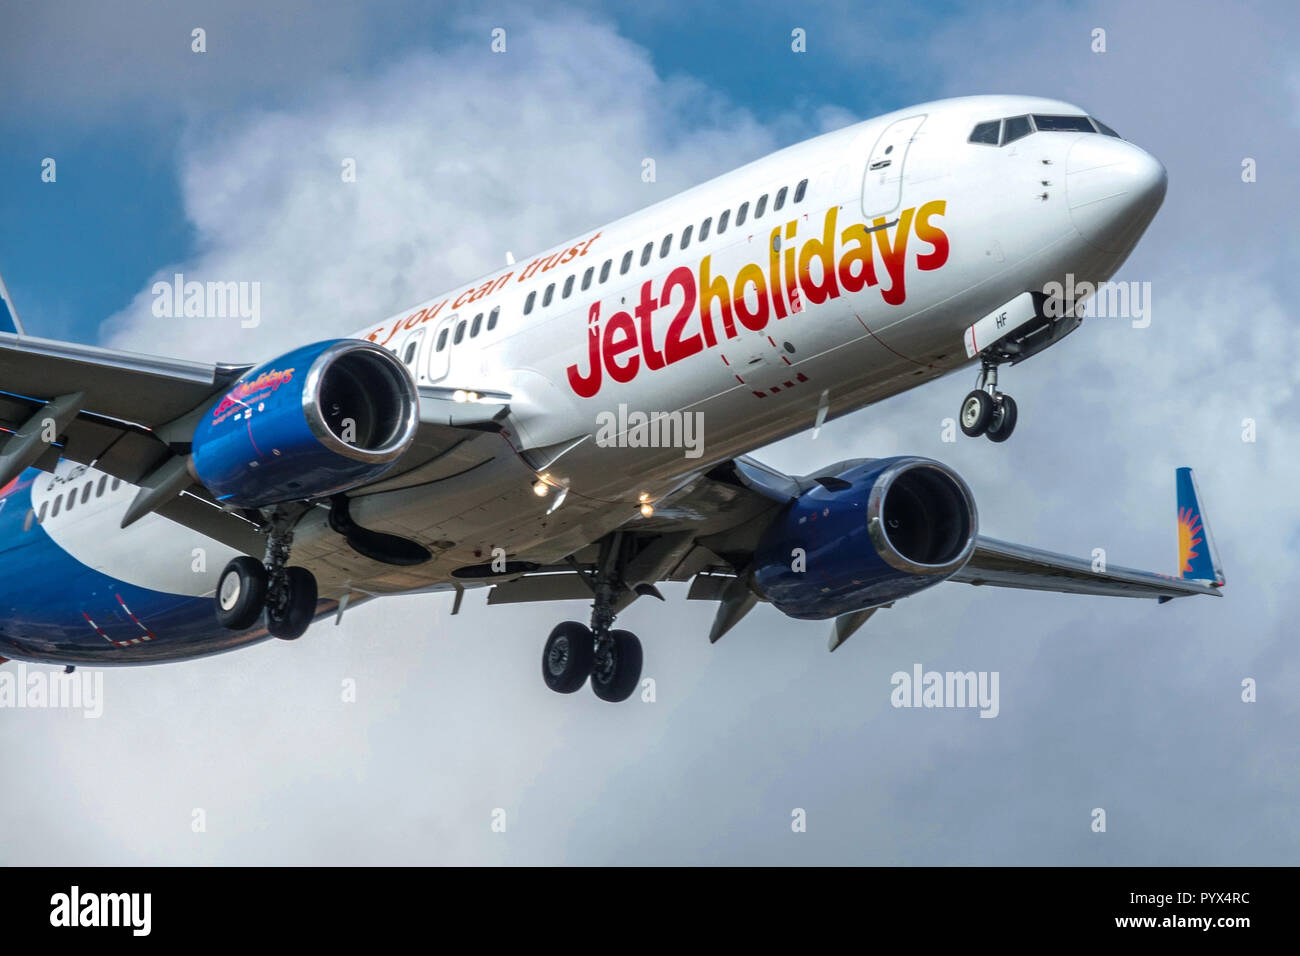 Jet2 holidays aircraft landing to the airport, Palma de Mallorca Spain Stock Photo